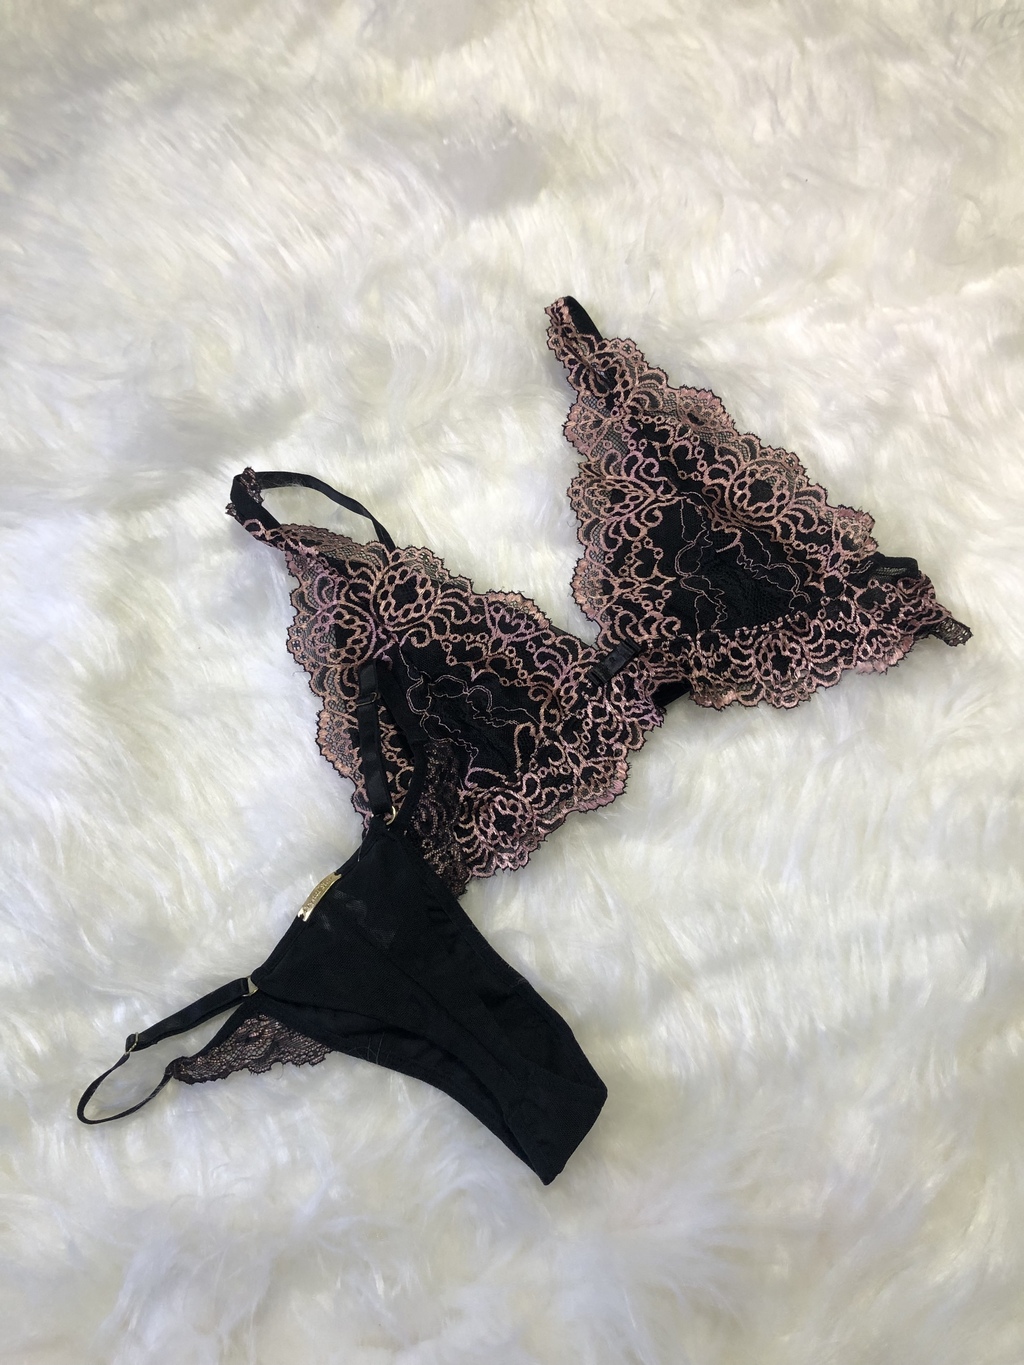 Bralette Underwear- moda lingerie a mostra - sutiã com renda